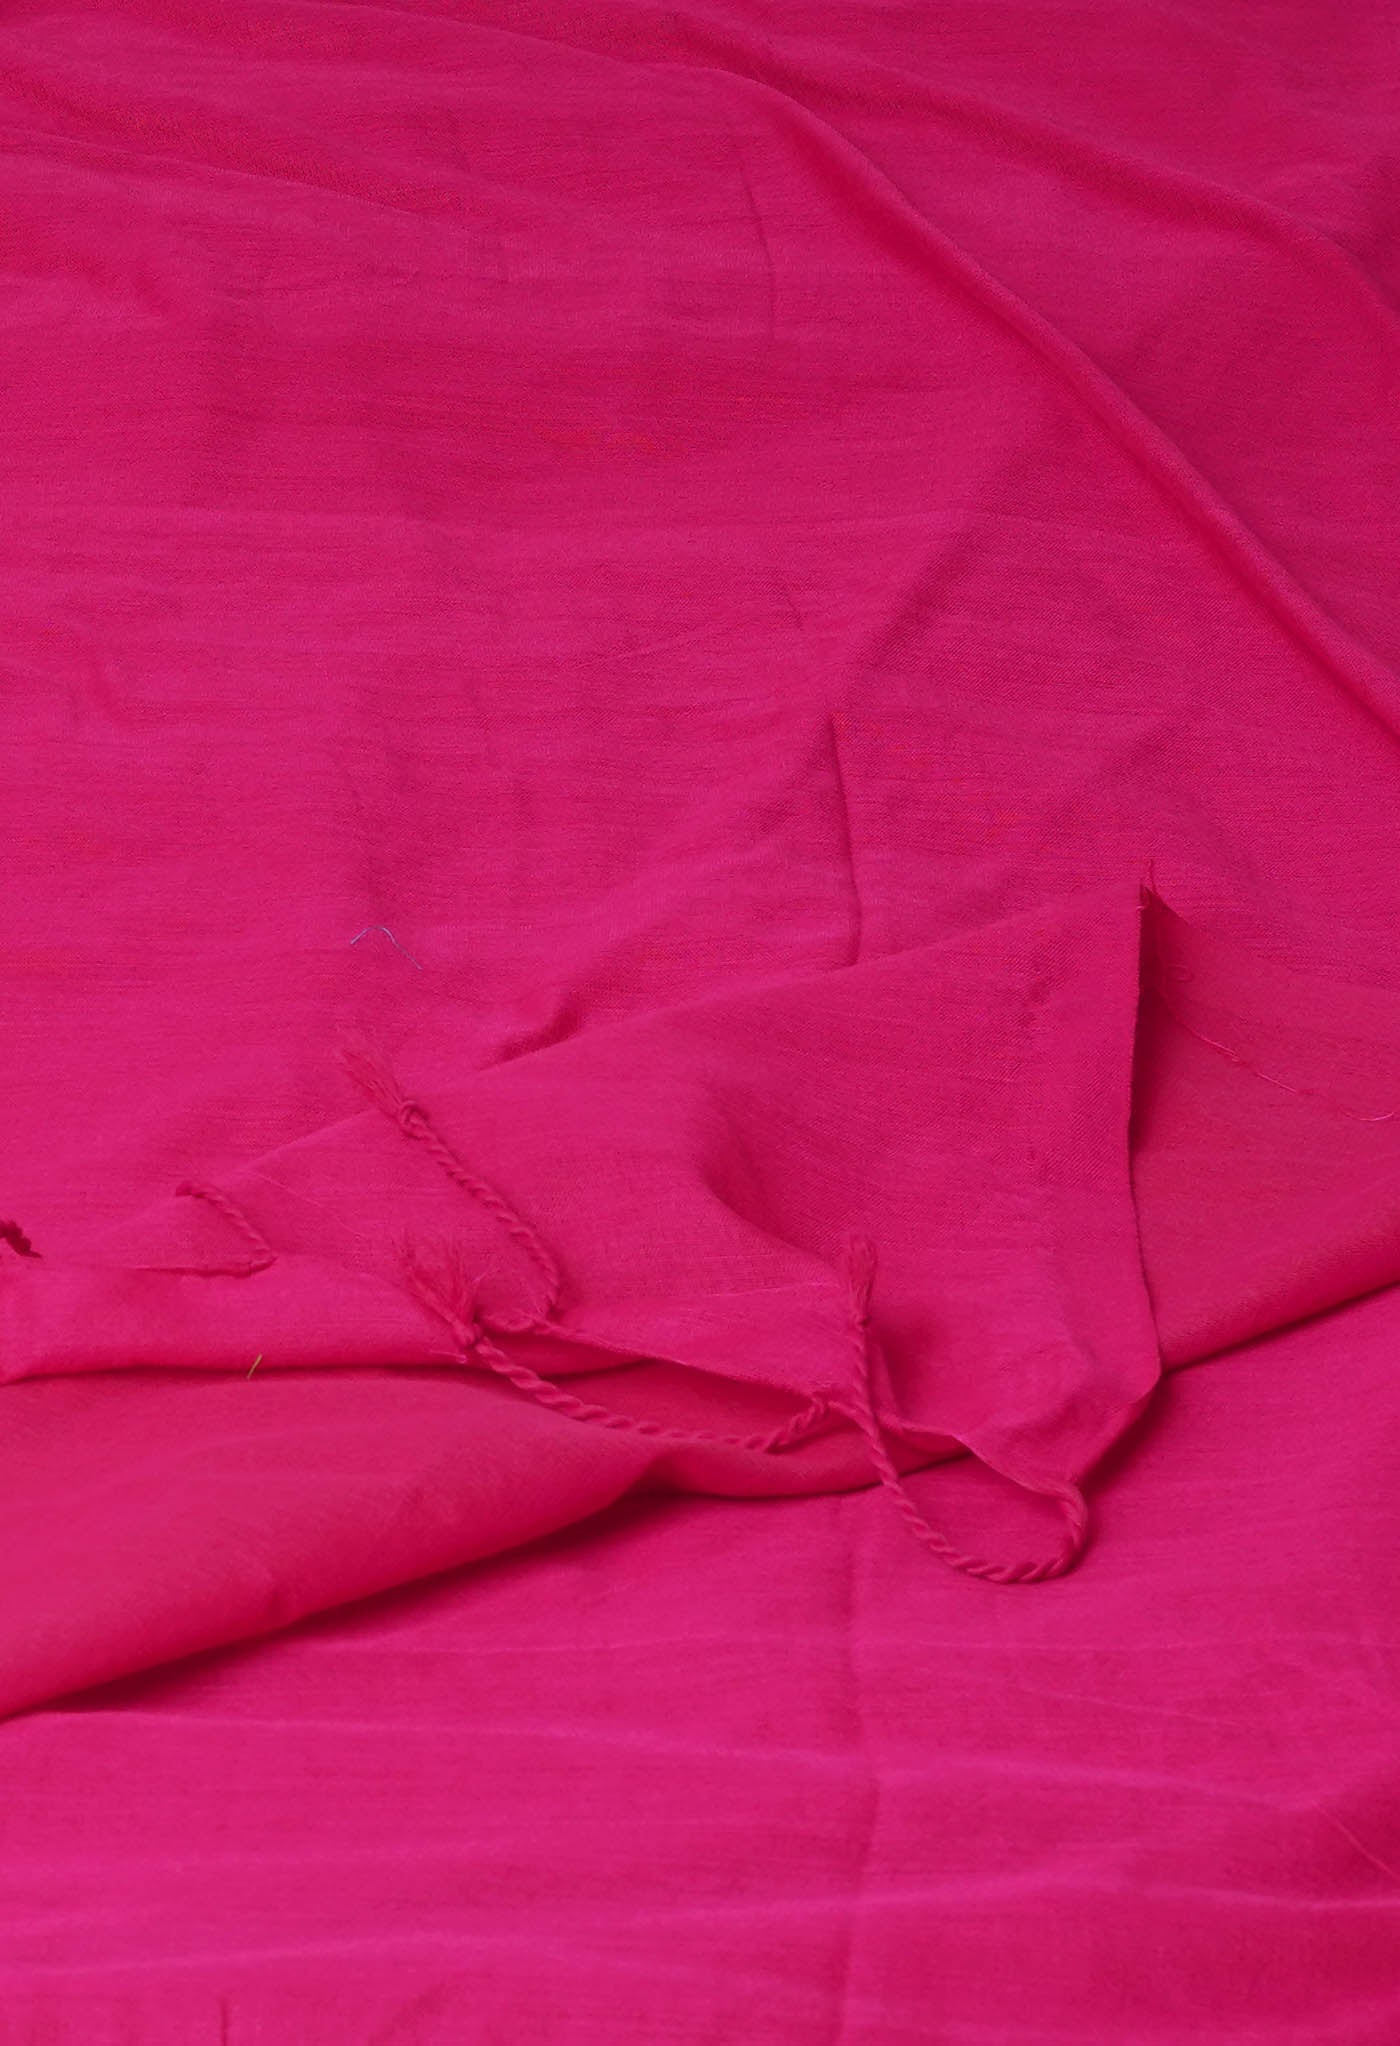 Pink Pure Cross Weave Plain Cotton Linen Saree With Tassels